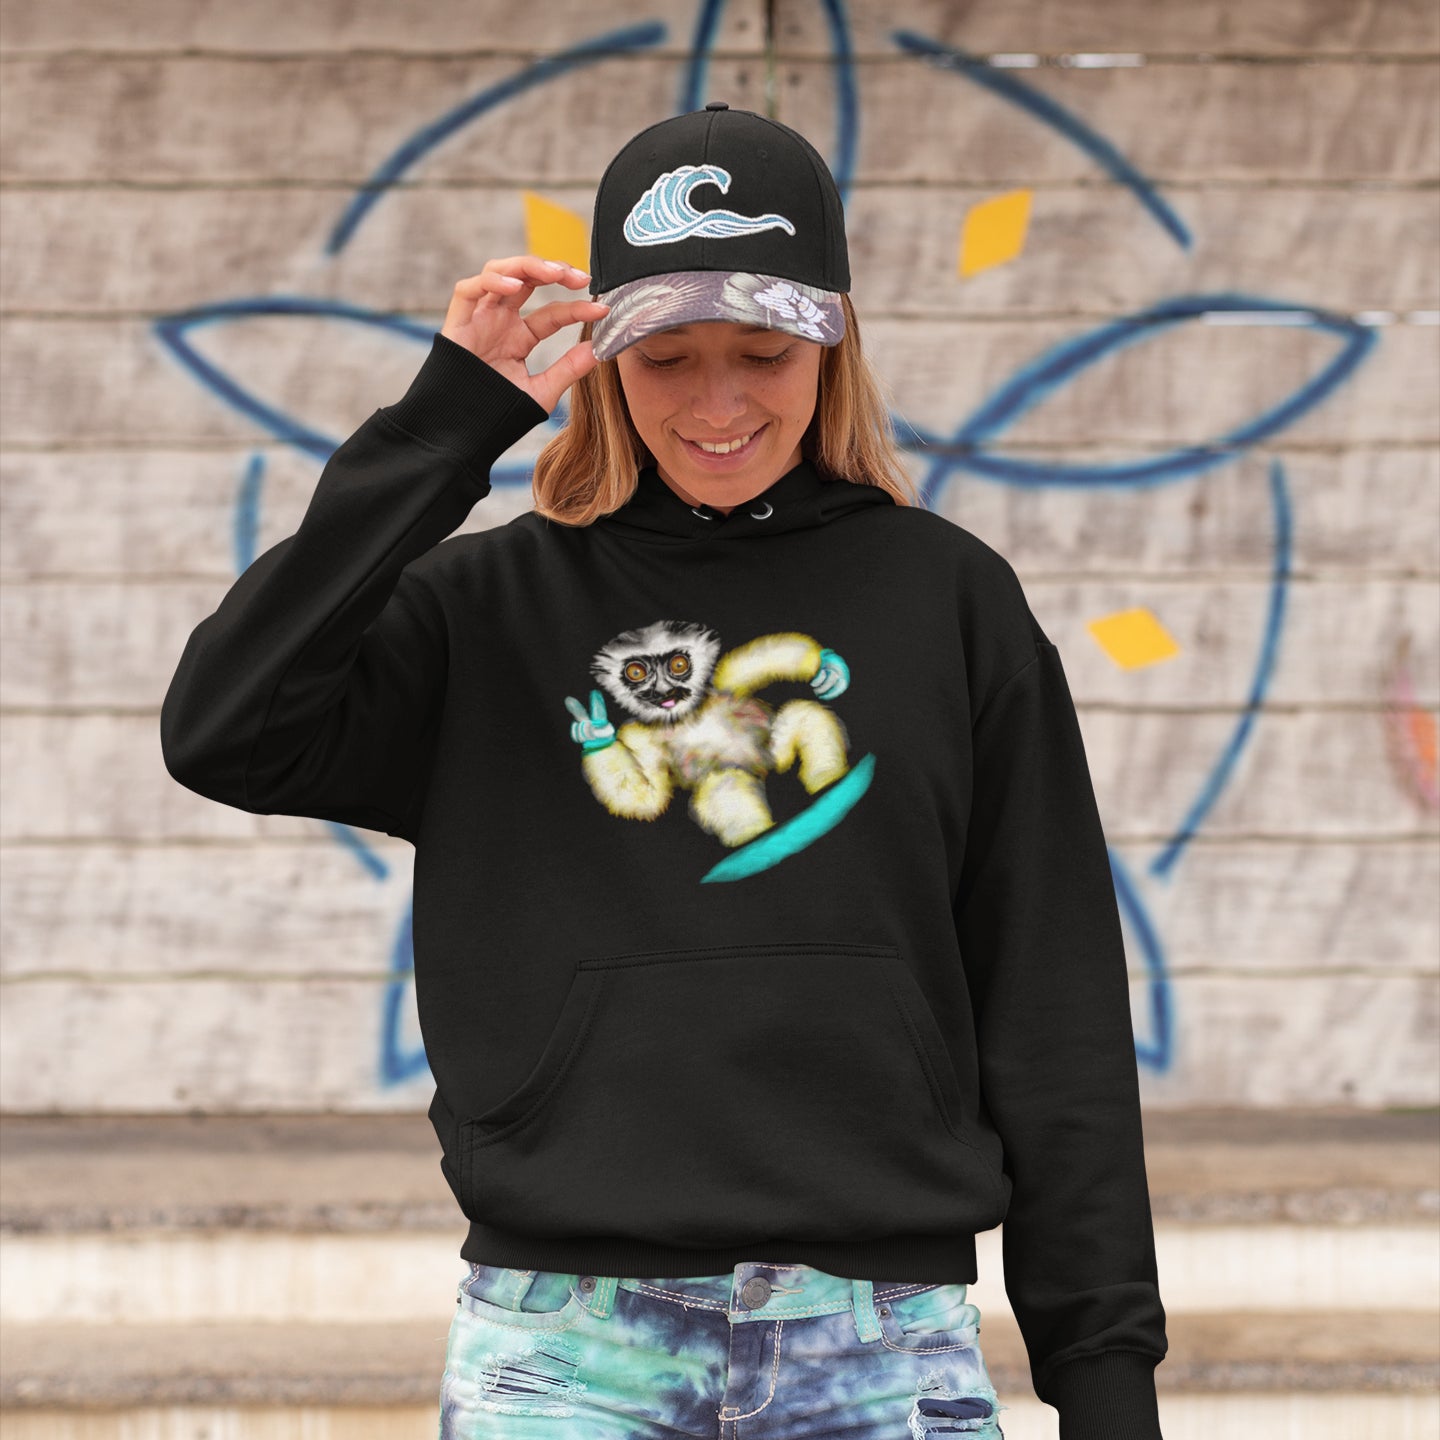 Woman wearing a Sifakas snowboarder sustainable vegan hoodie